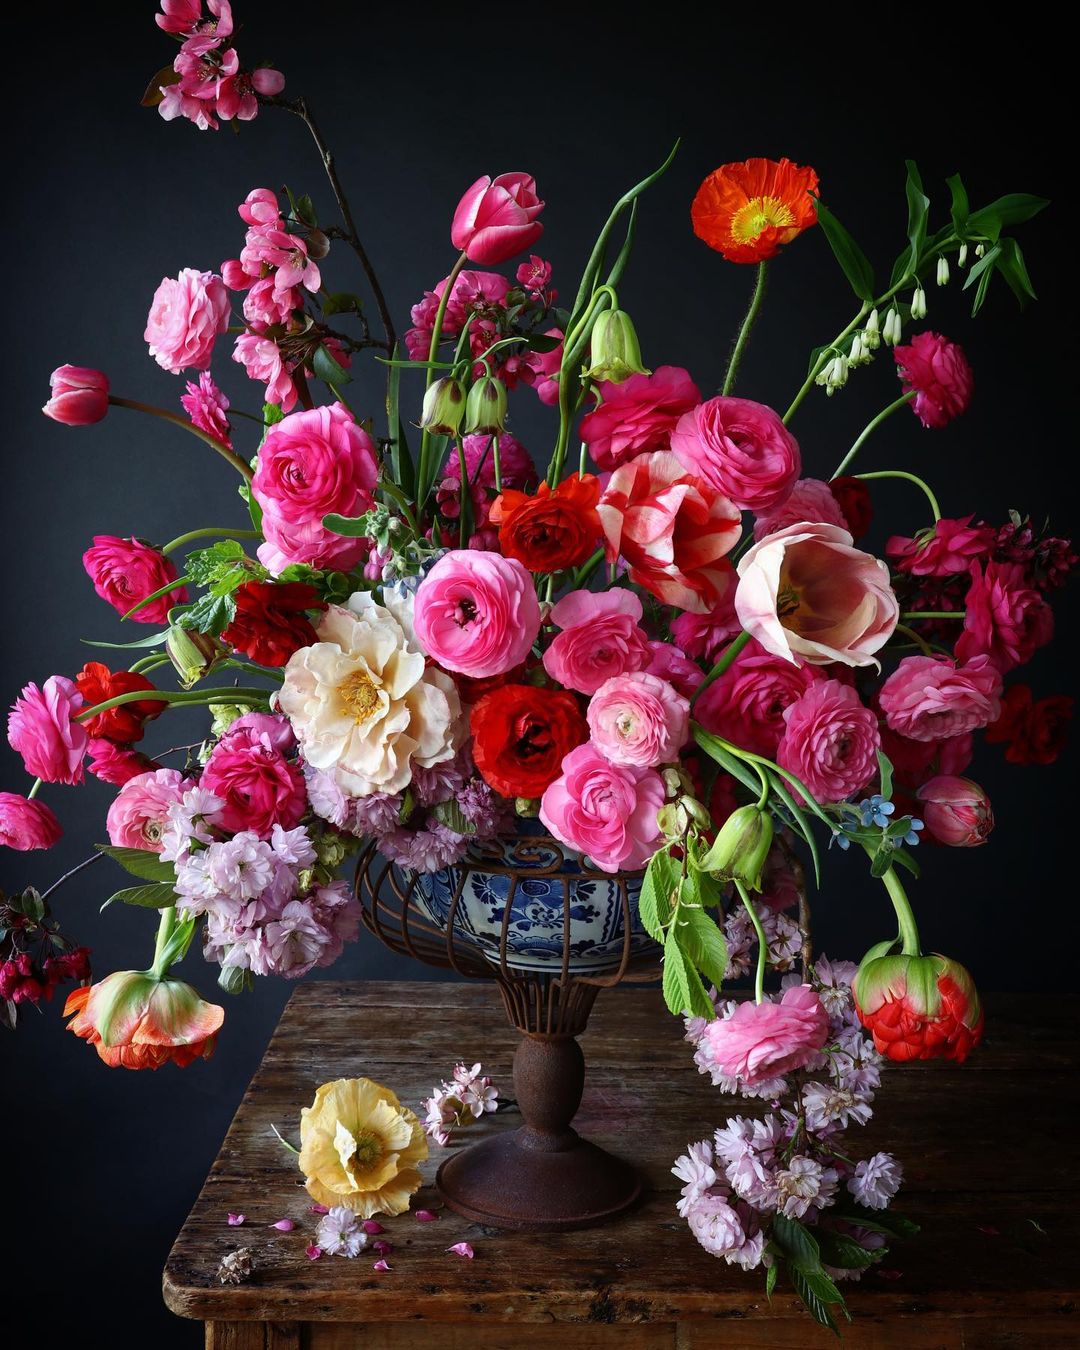 The Edible Art From Cake Atelier Amsterdam Still-Life Flowers